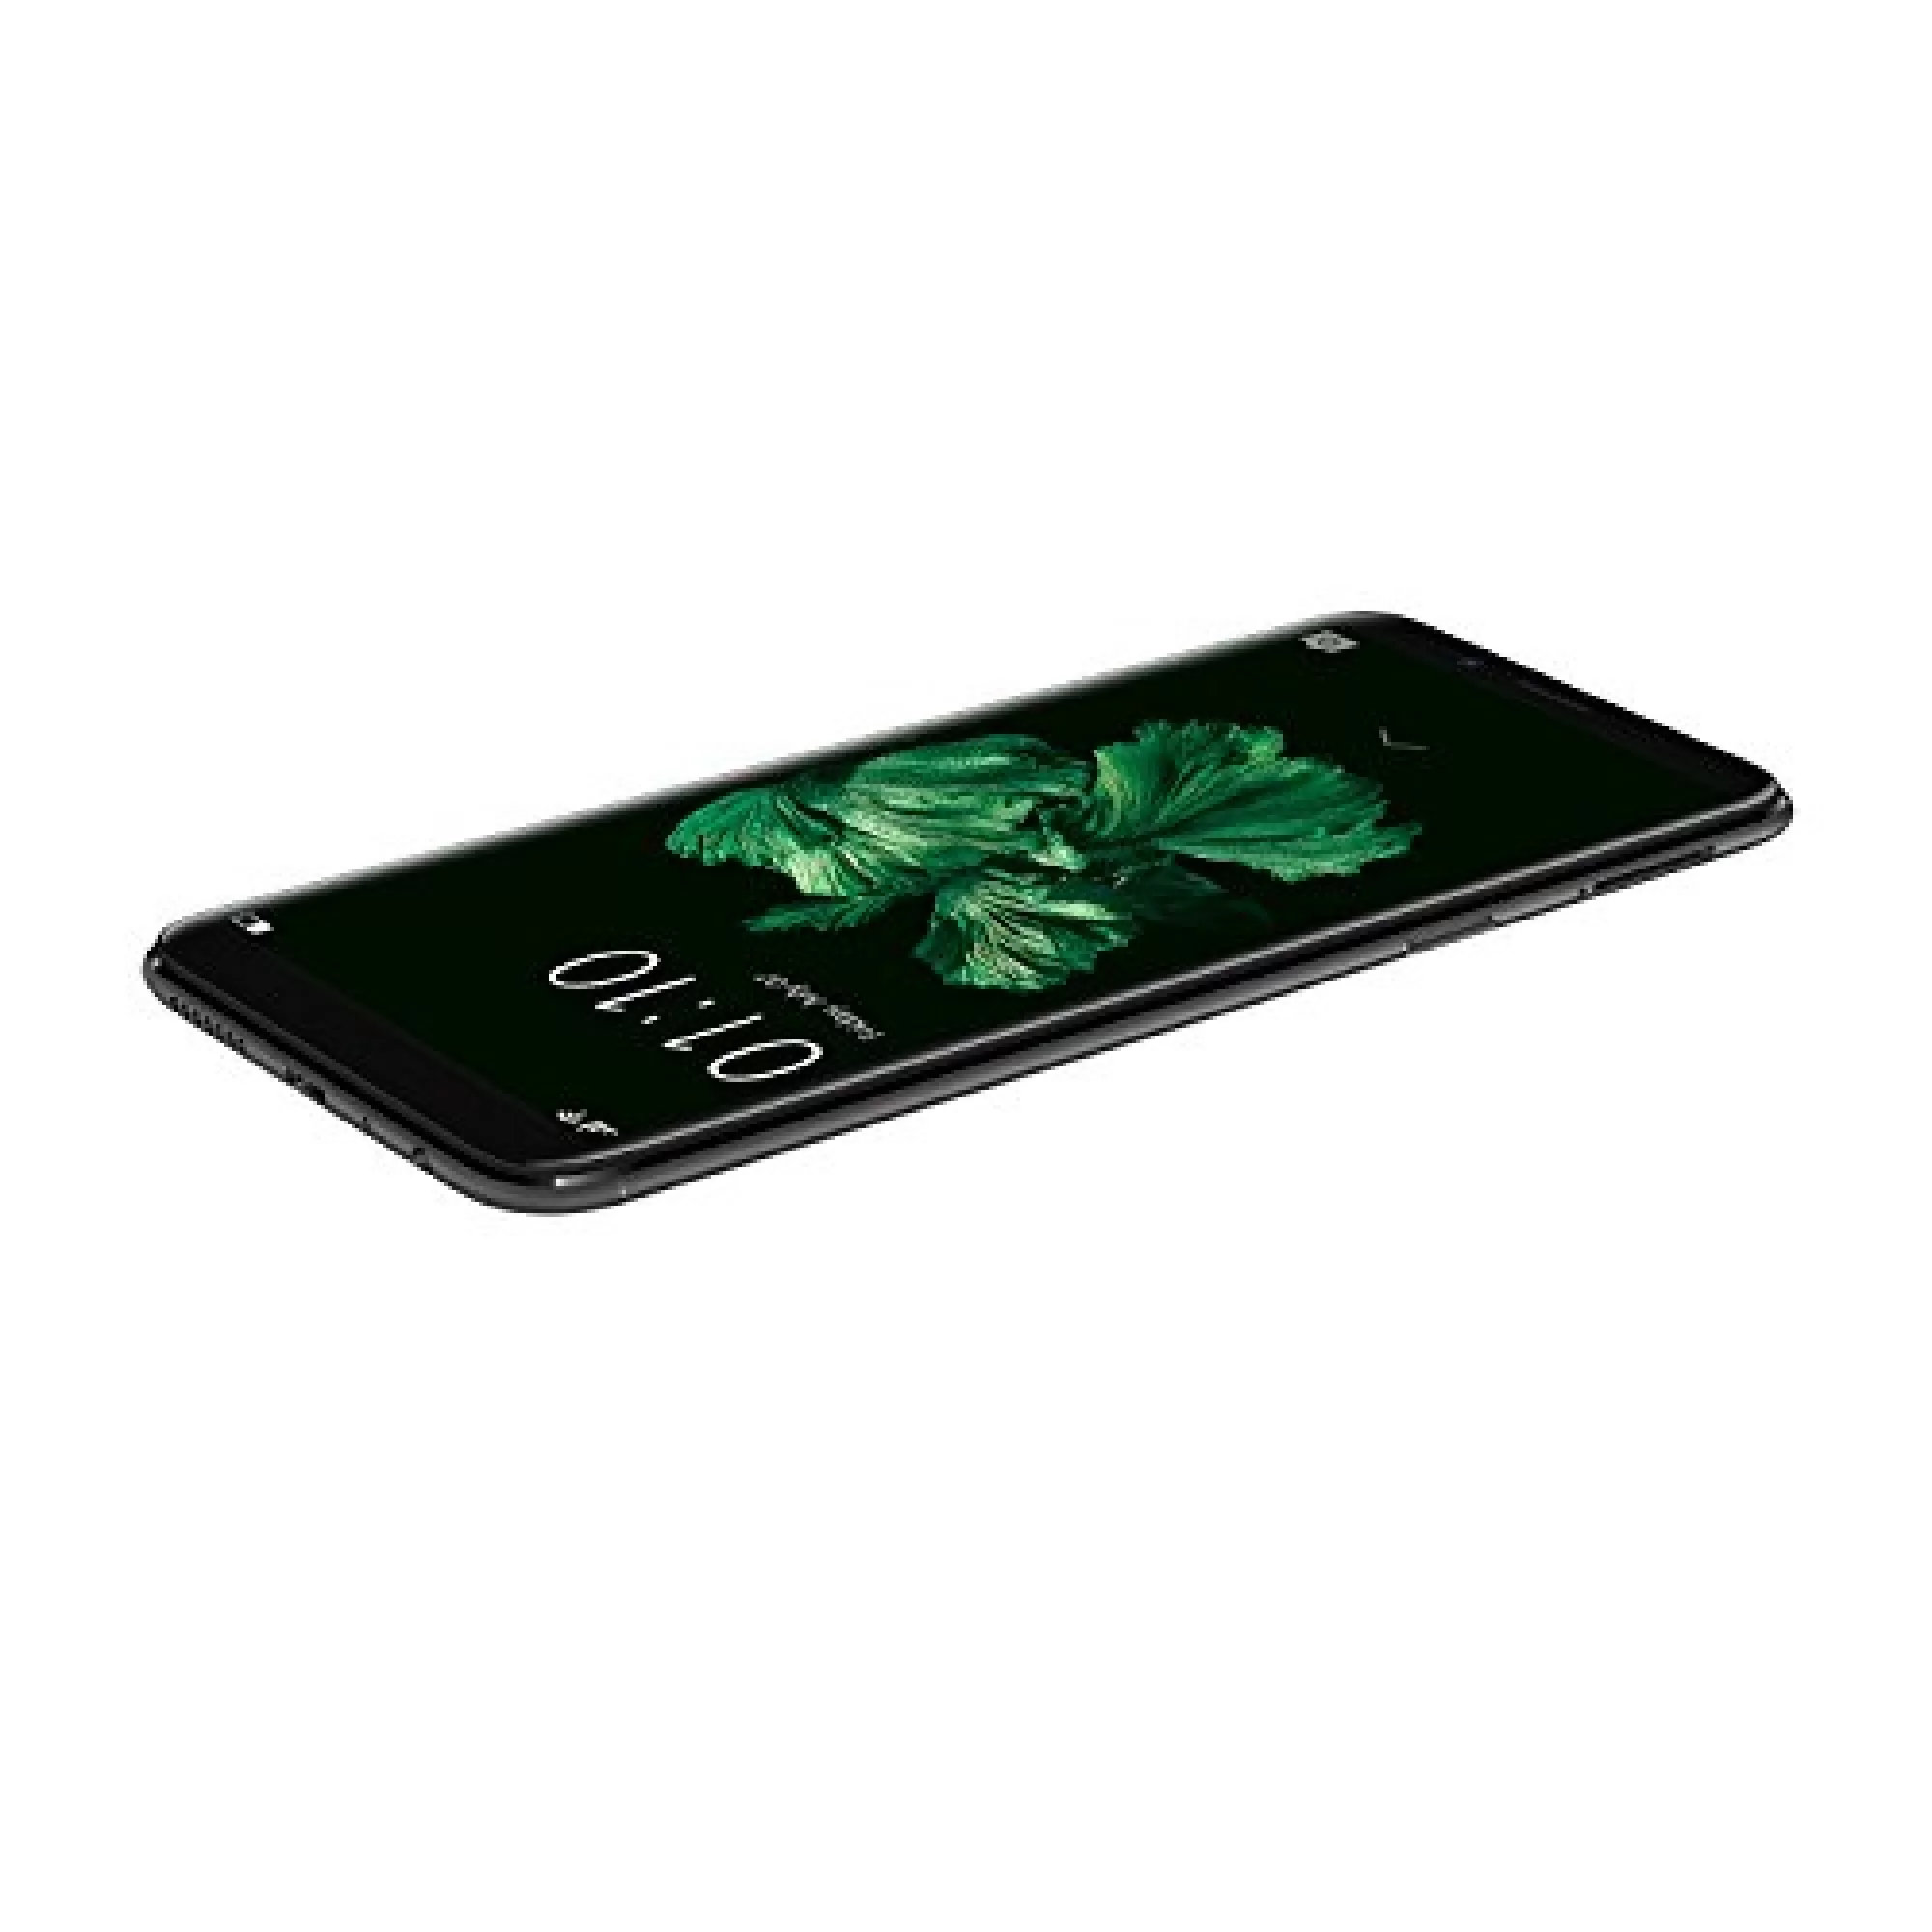 OPPO F5 Mobile Phone 4GB RAM REFURBISHED Just Like New 1Month Warranty  - Black, 32GB